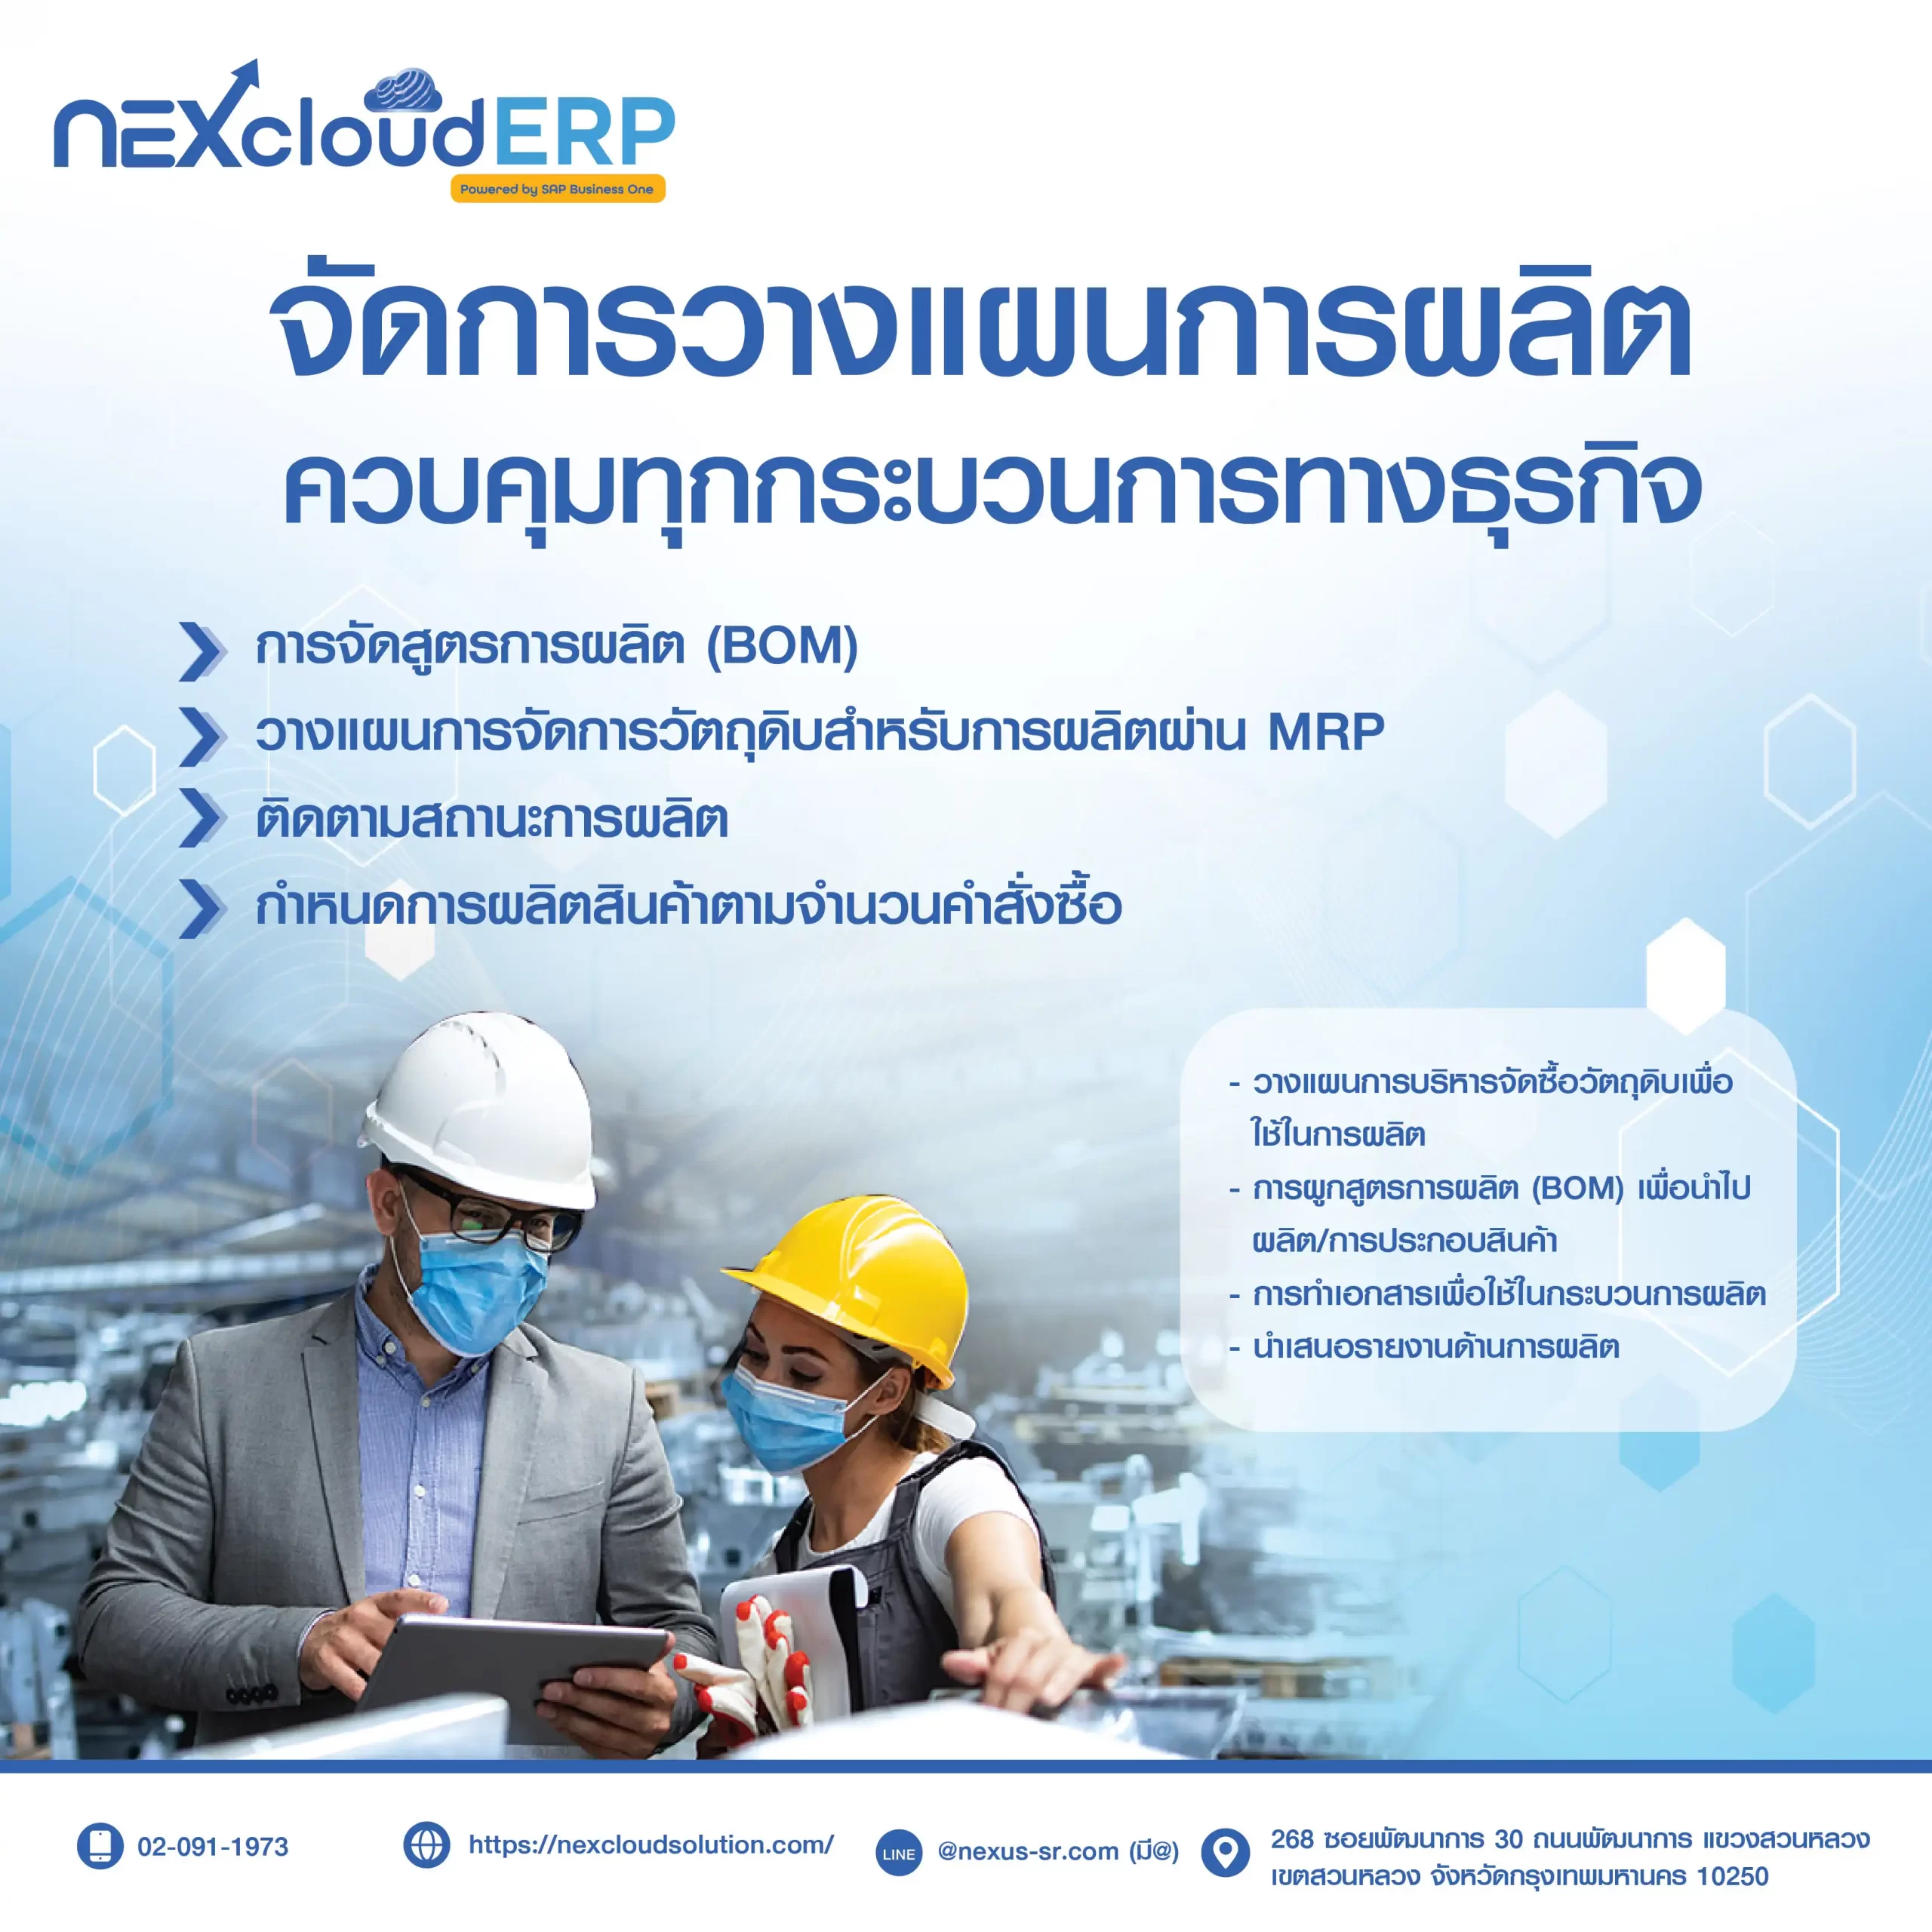 NExcloud ERP โปรแกรม ERP ระบบการวางแผนการผลิต ความต้องการวัตถุดิบ MRP ERP การผลิต